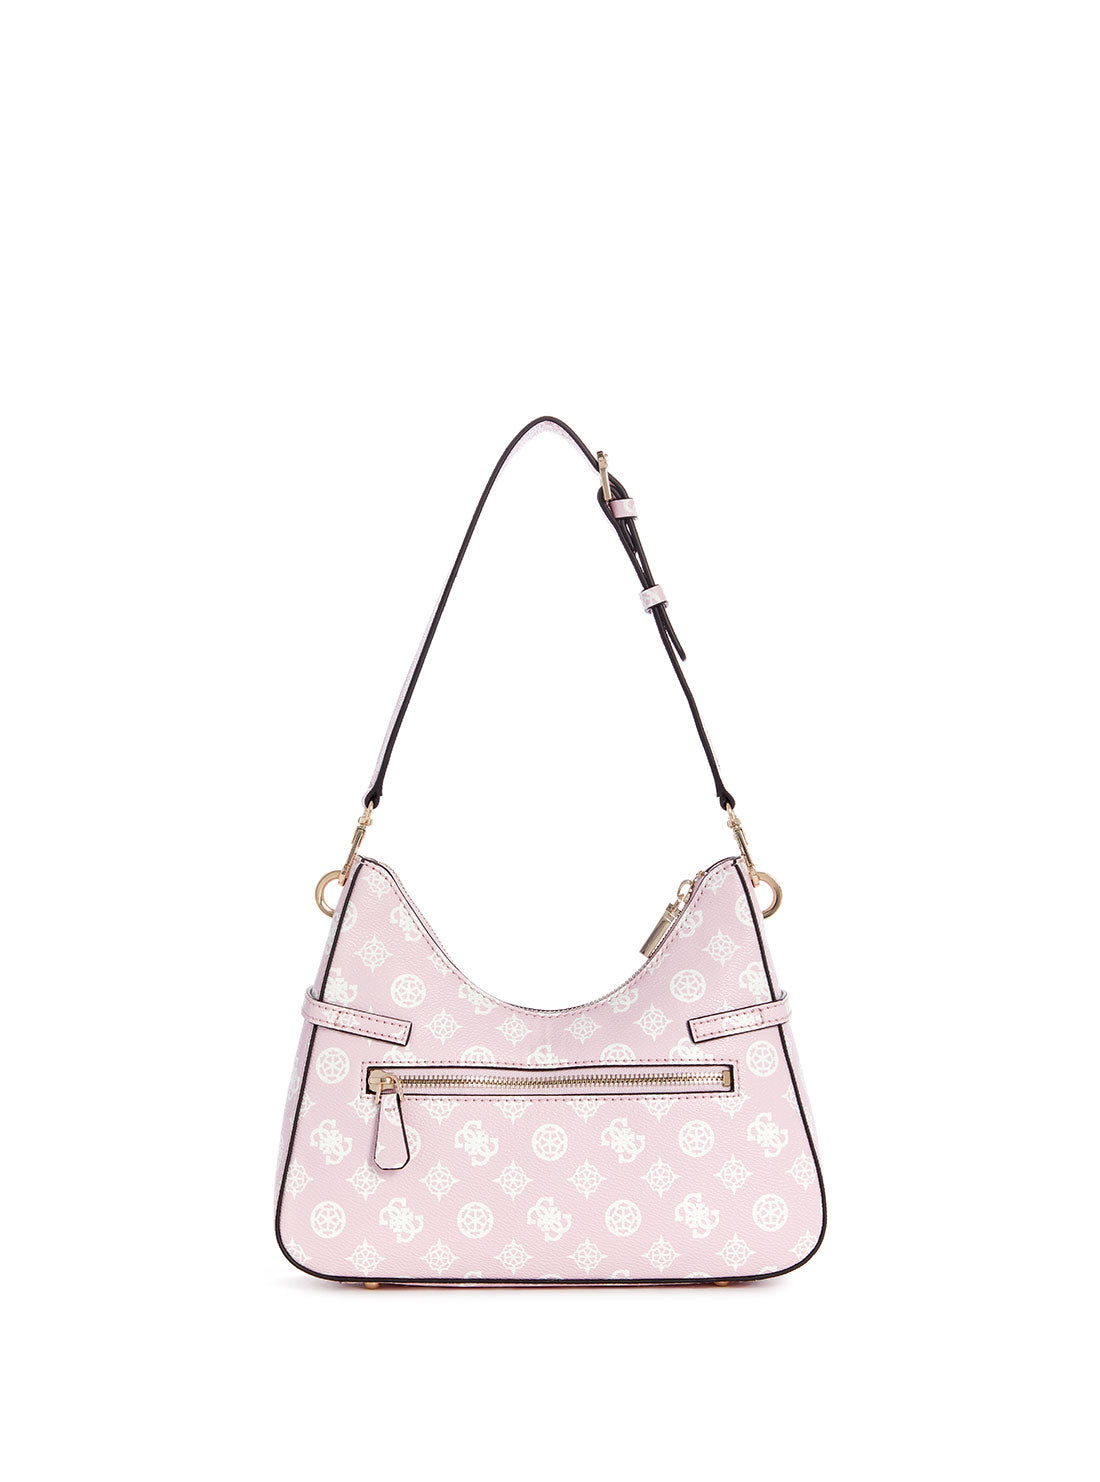 GUESS Pink Logo Loralee Hobo Bag back view